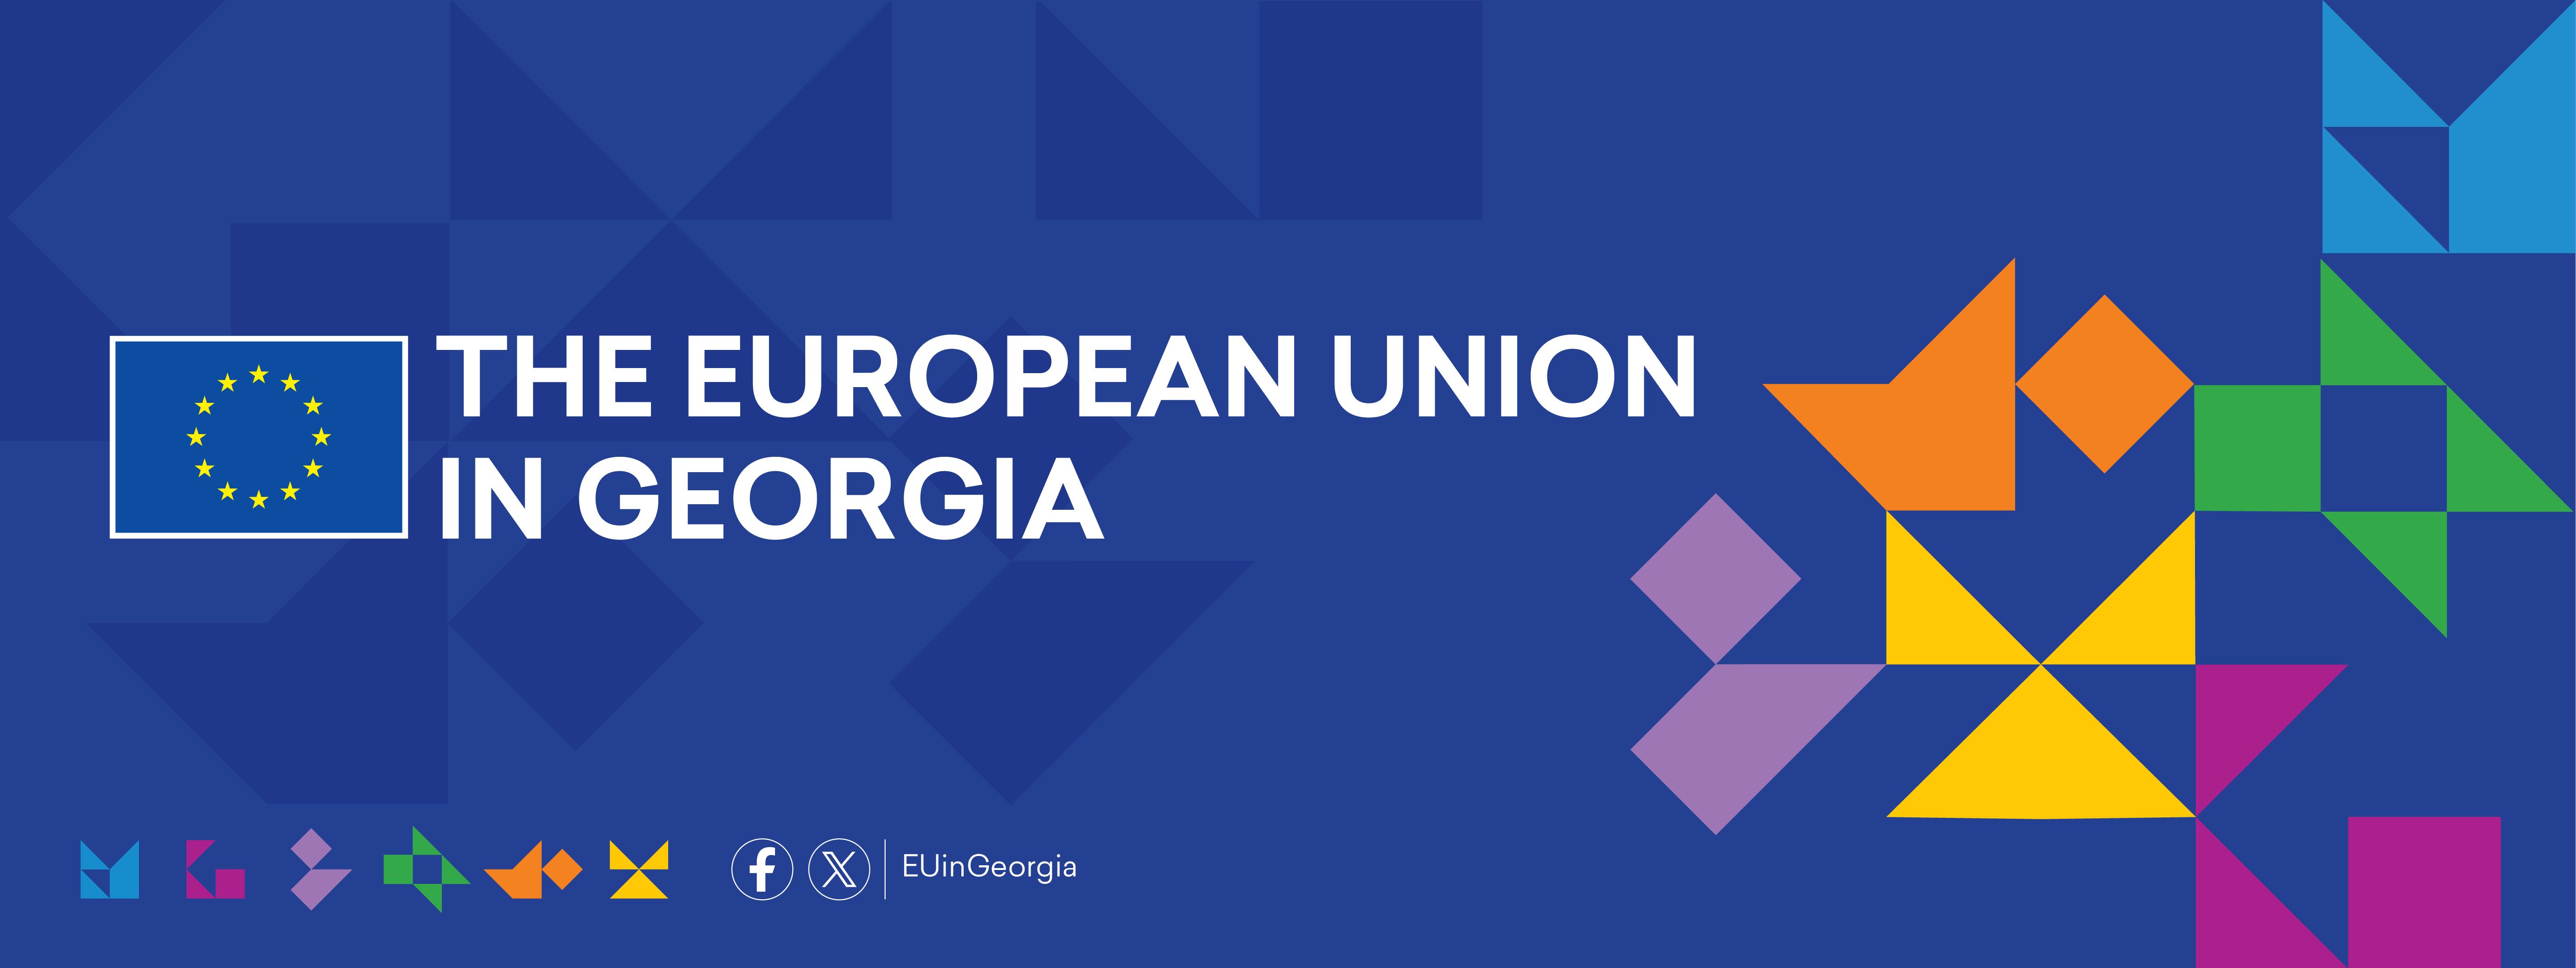 The European Union in Georgia